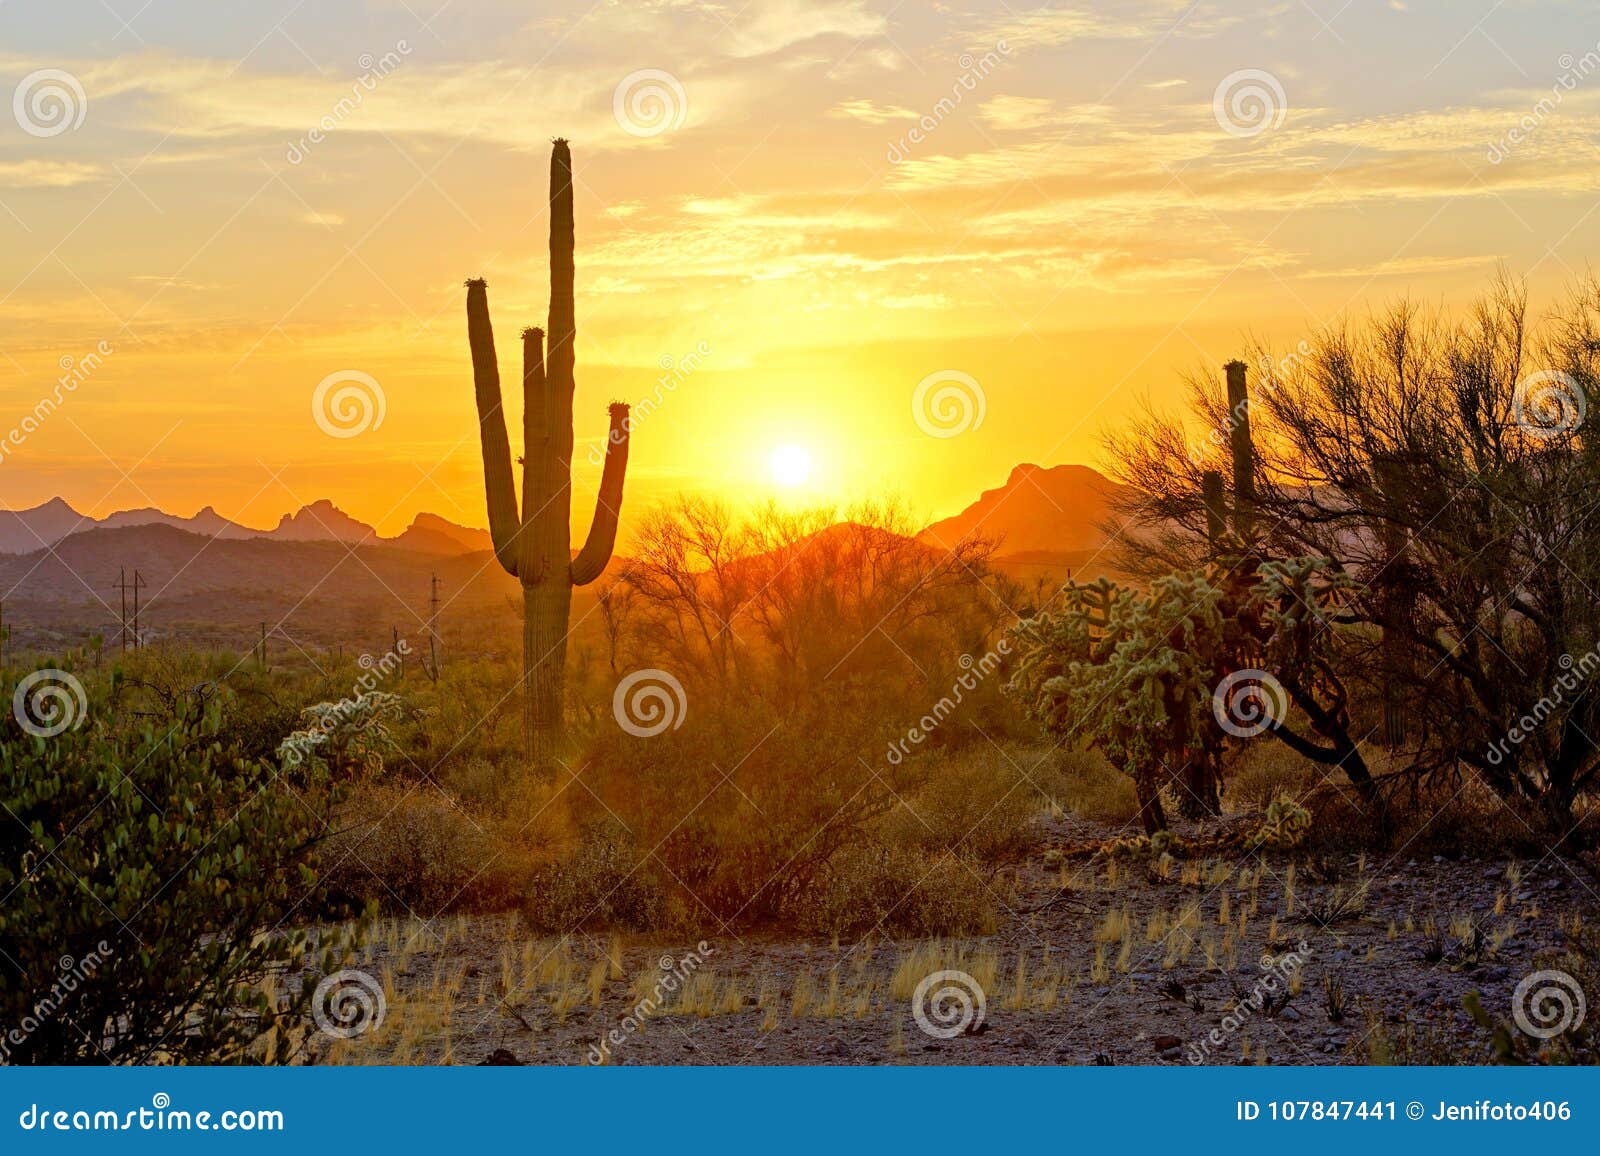 sunset view of the arizona desert with cacti